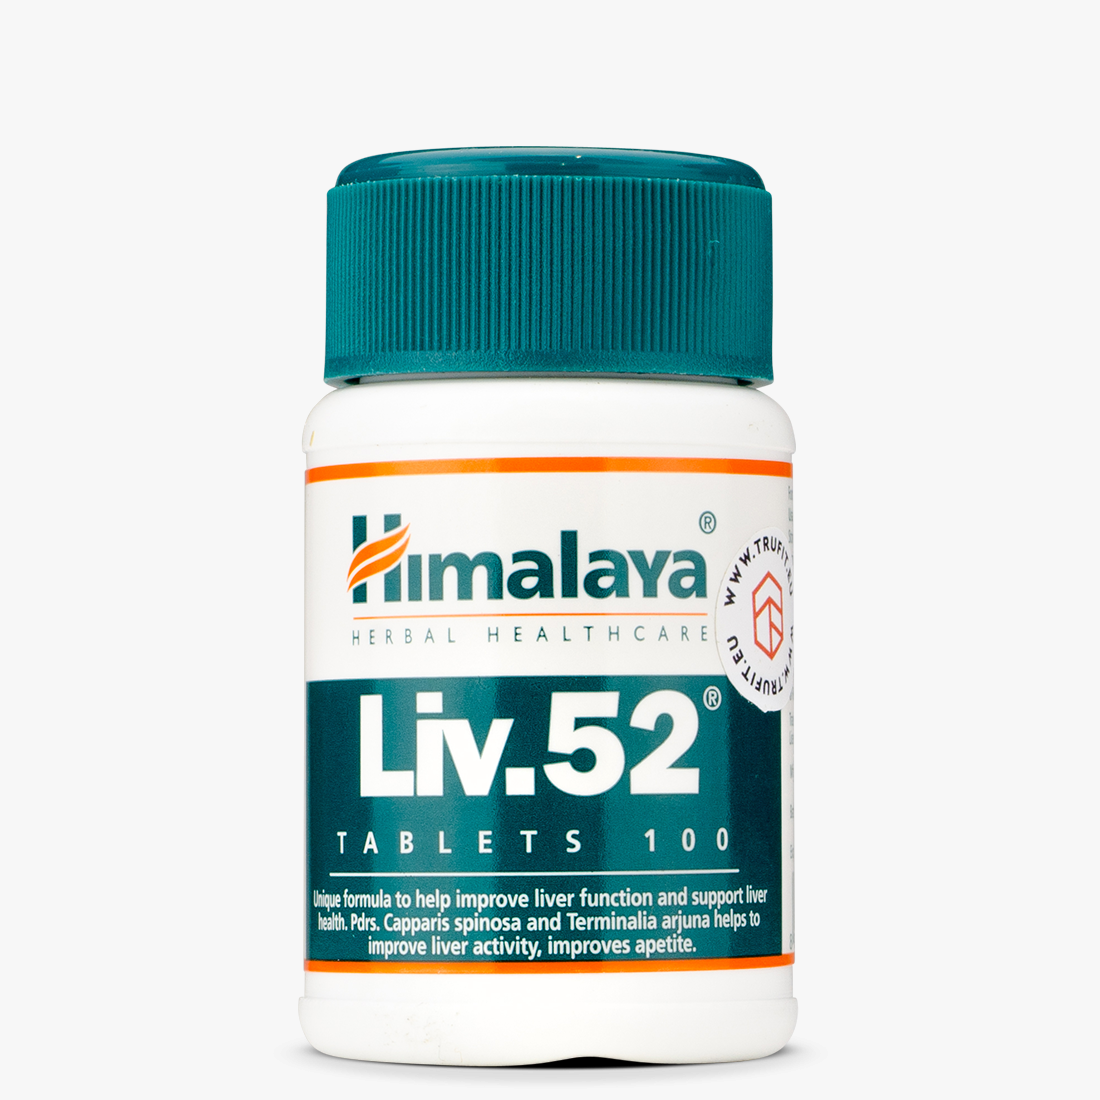 Liv.52 – Himalaya Wellness (Spain)